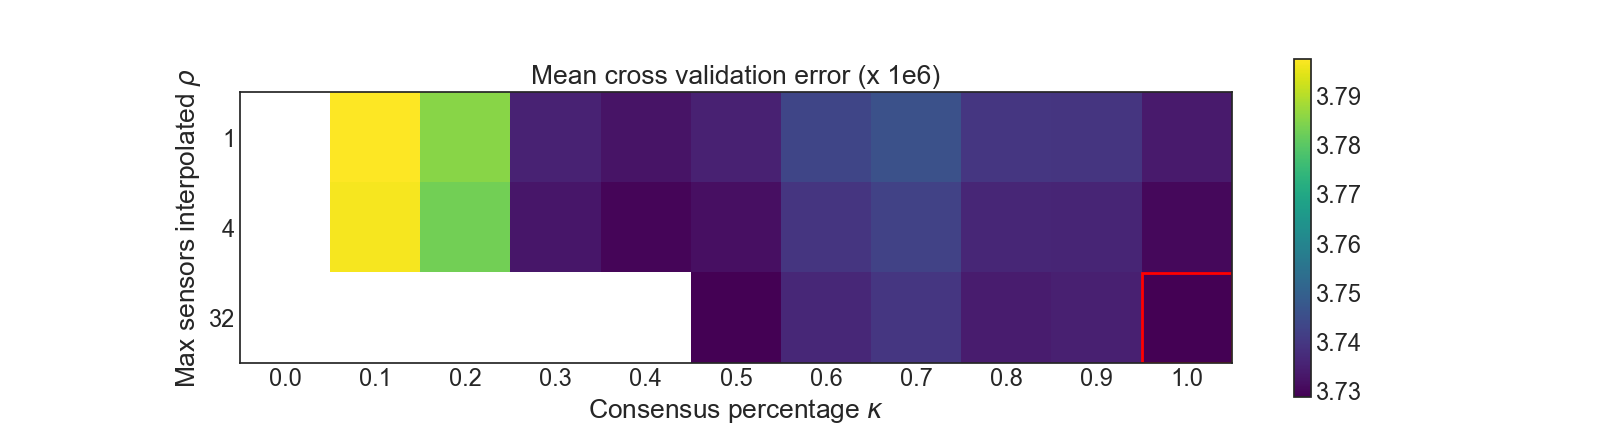 Mean cross validation error (x 1e6)